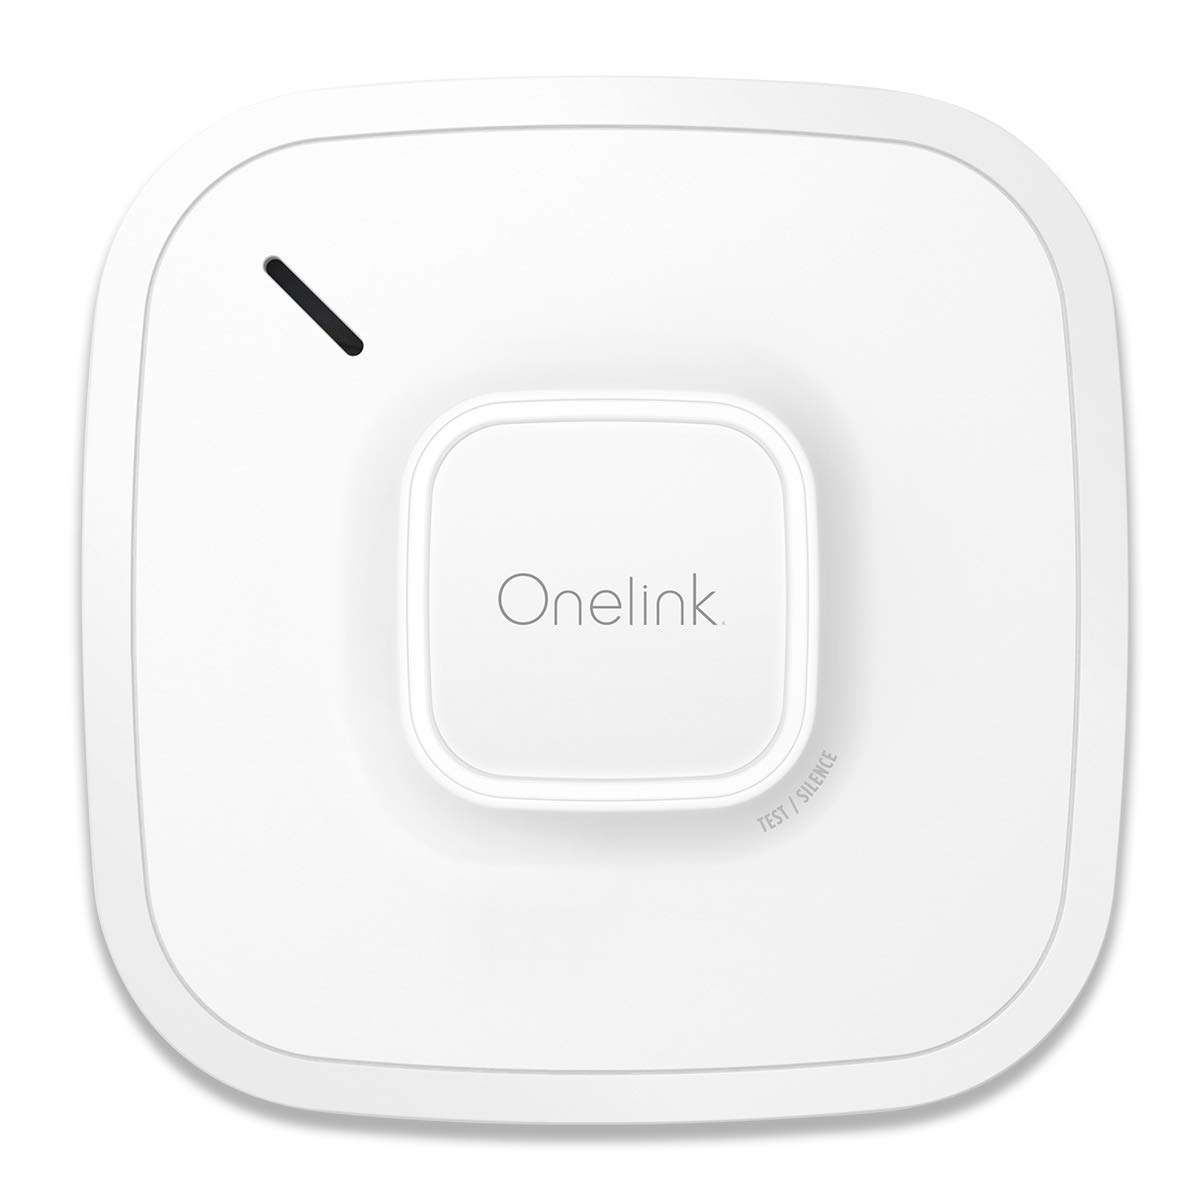 First Alert Releases New Onelink Smart Smoke &amp; Carbon Monoxide Alarm With Apple HomeKit Support